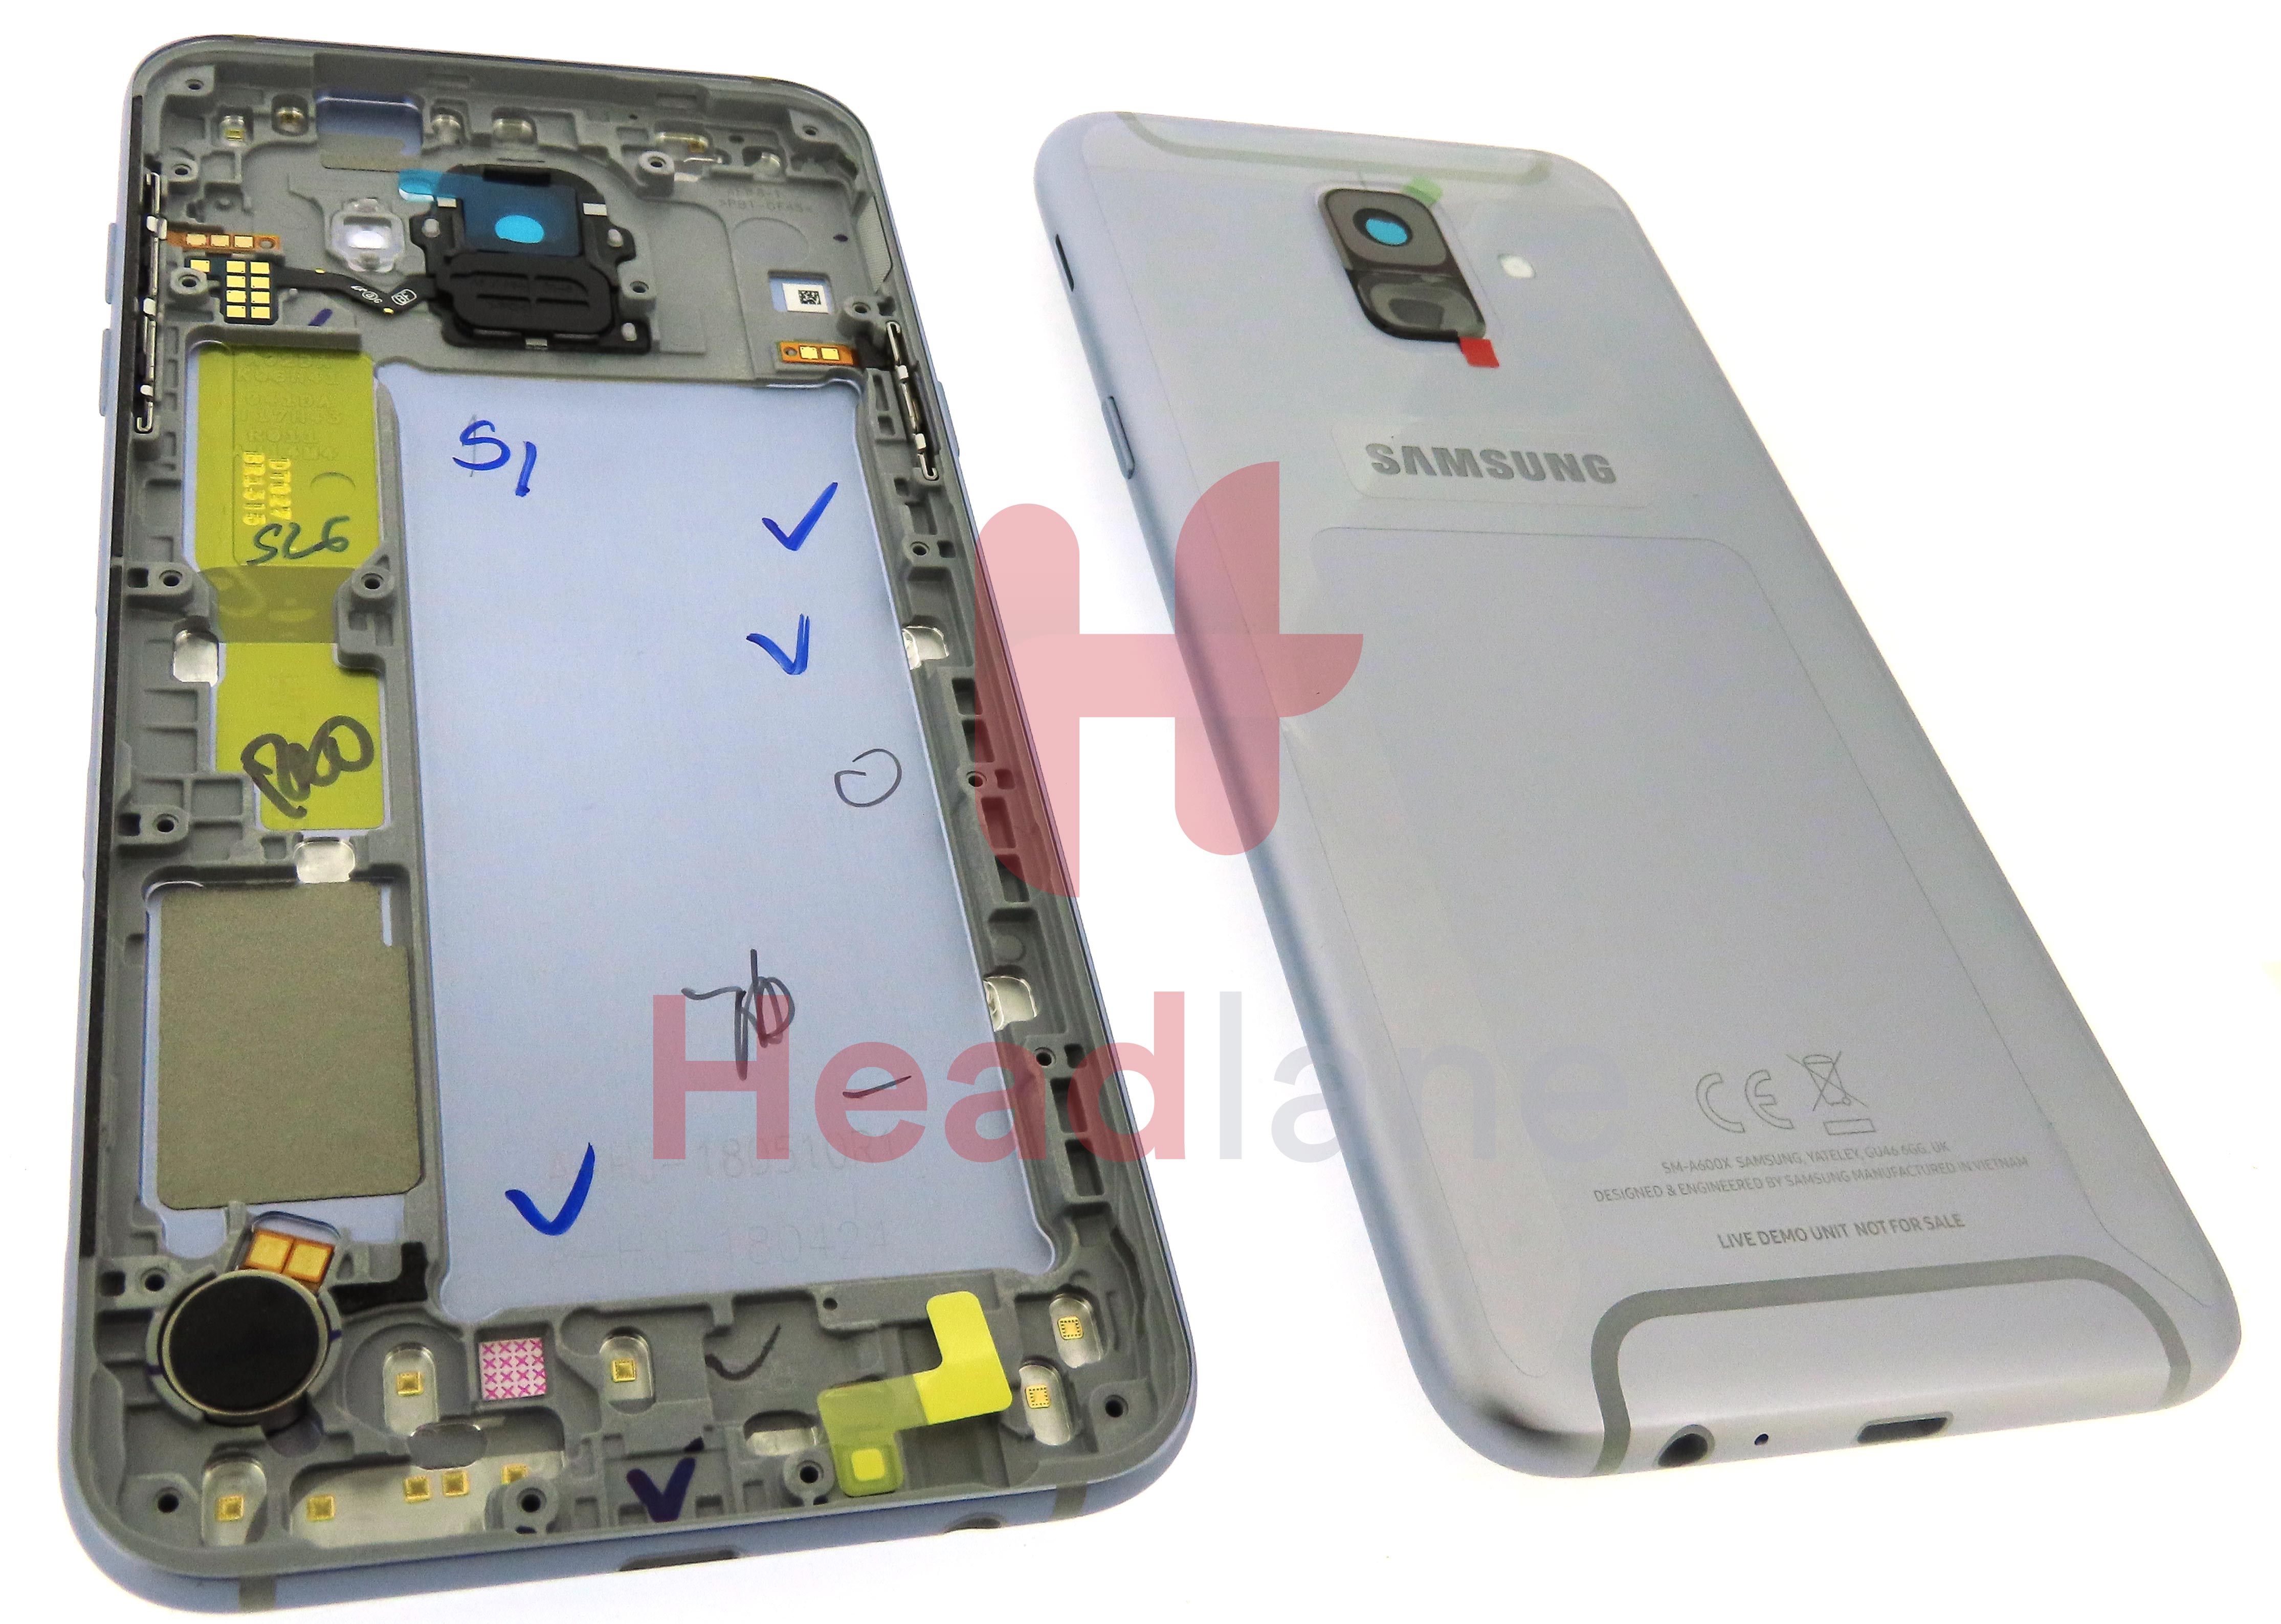 Samsung SM-A600 Galaxy A6 (2018) Back / Battery Cover - Lavender (Live Demo Unit)